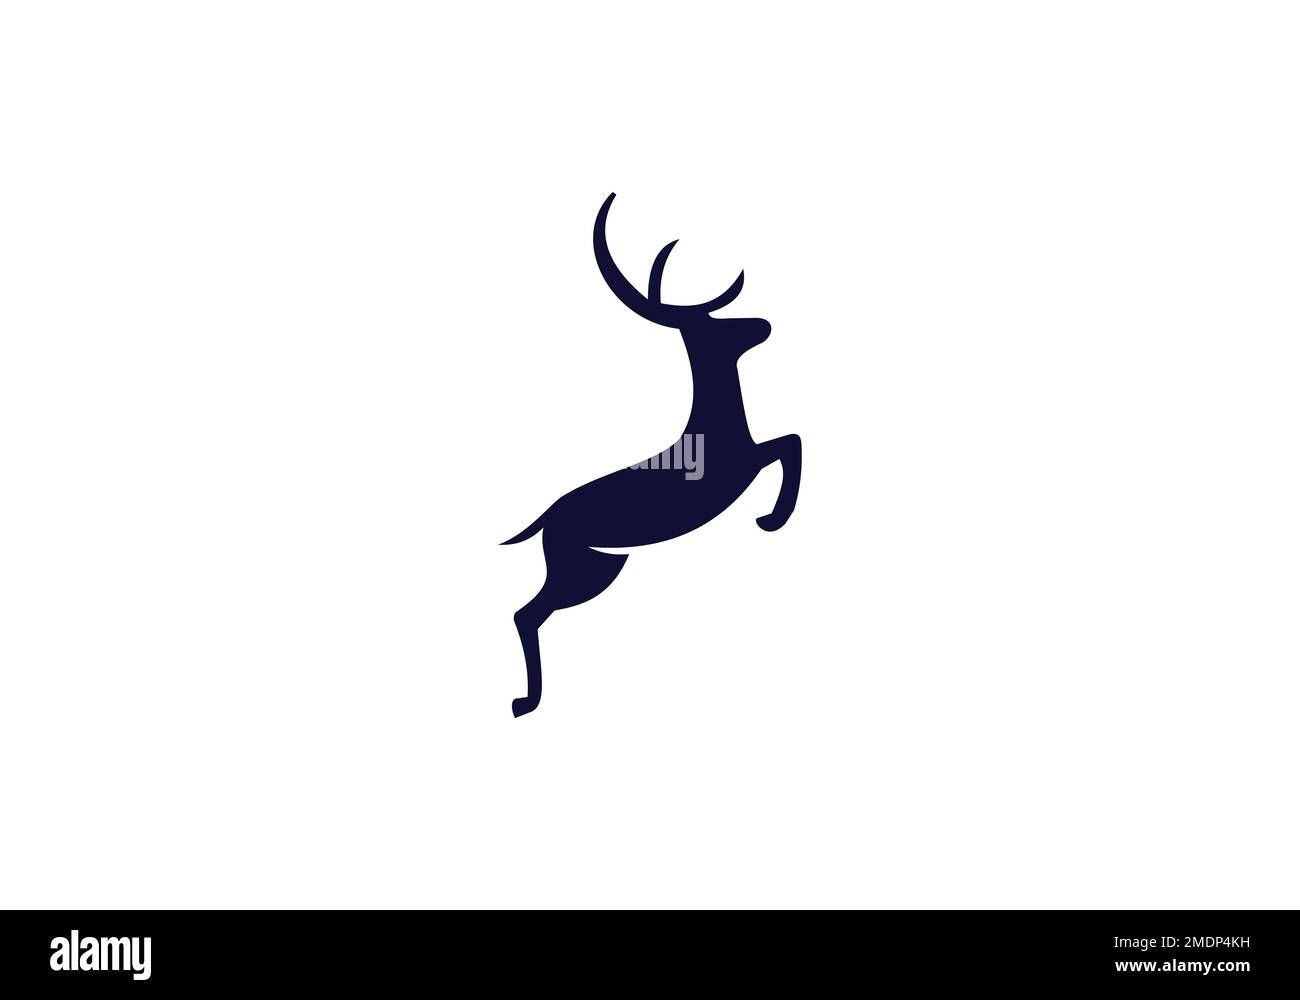 Jagermeister Deer logo SVG | Download Jagermeister Deer logo vector File